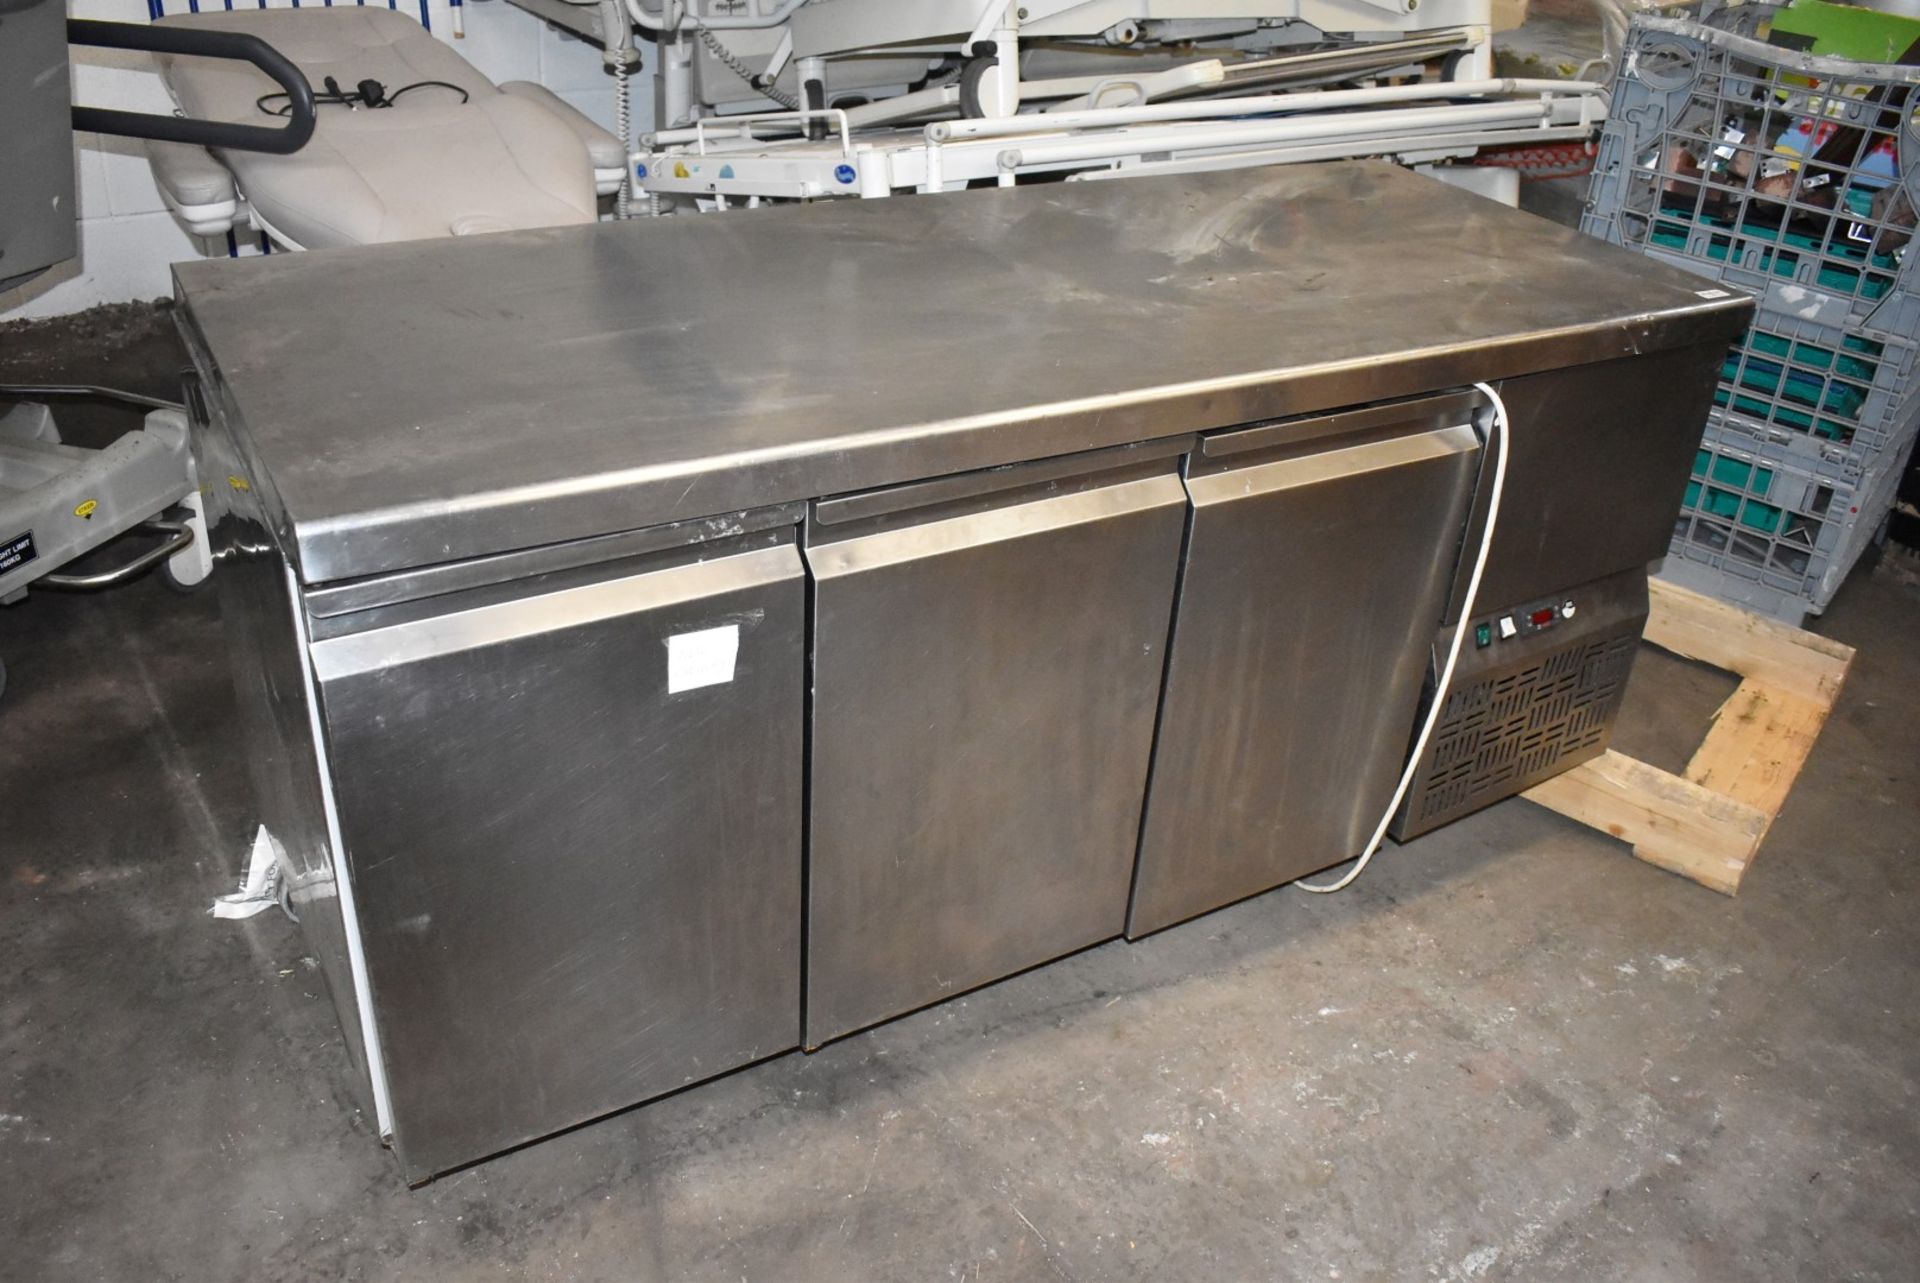 1 x Three Door Commercial Countertop Refrigerator - Width 180cm Approx - CL011 - Ref BLVD163 WH5 -